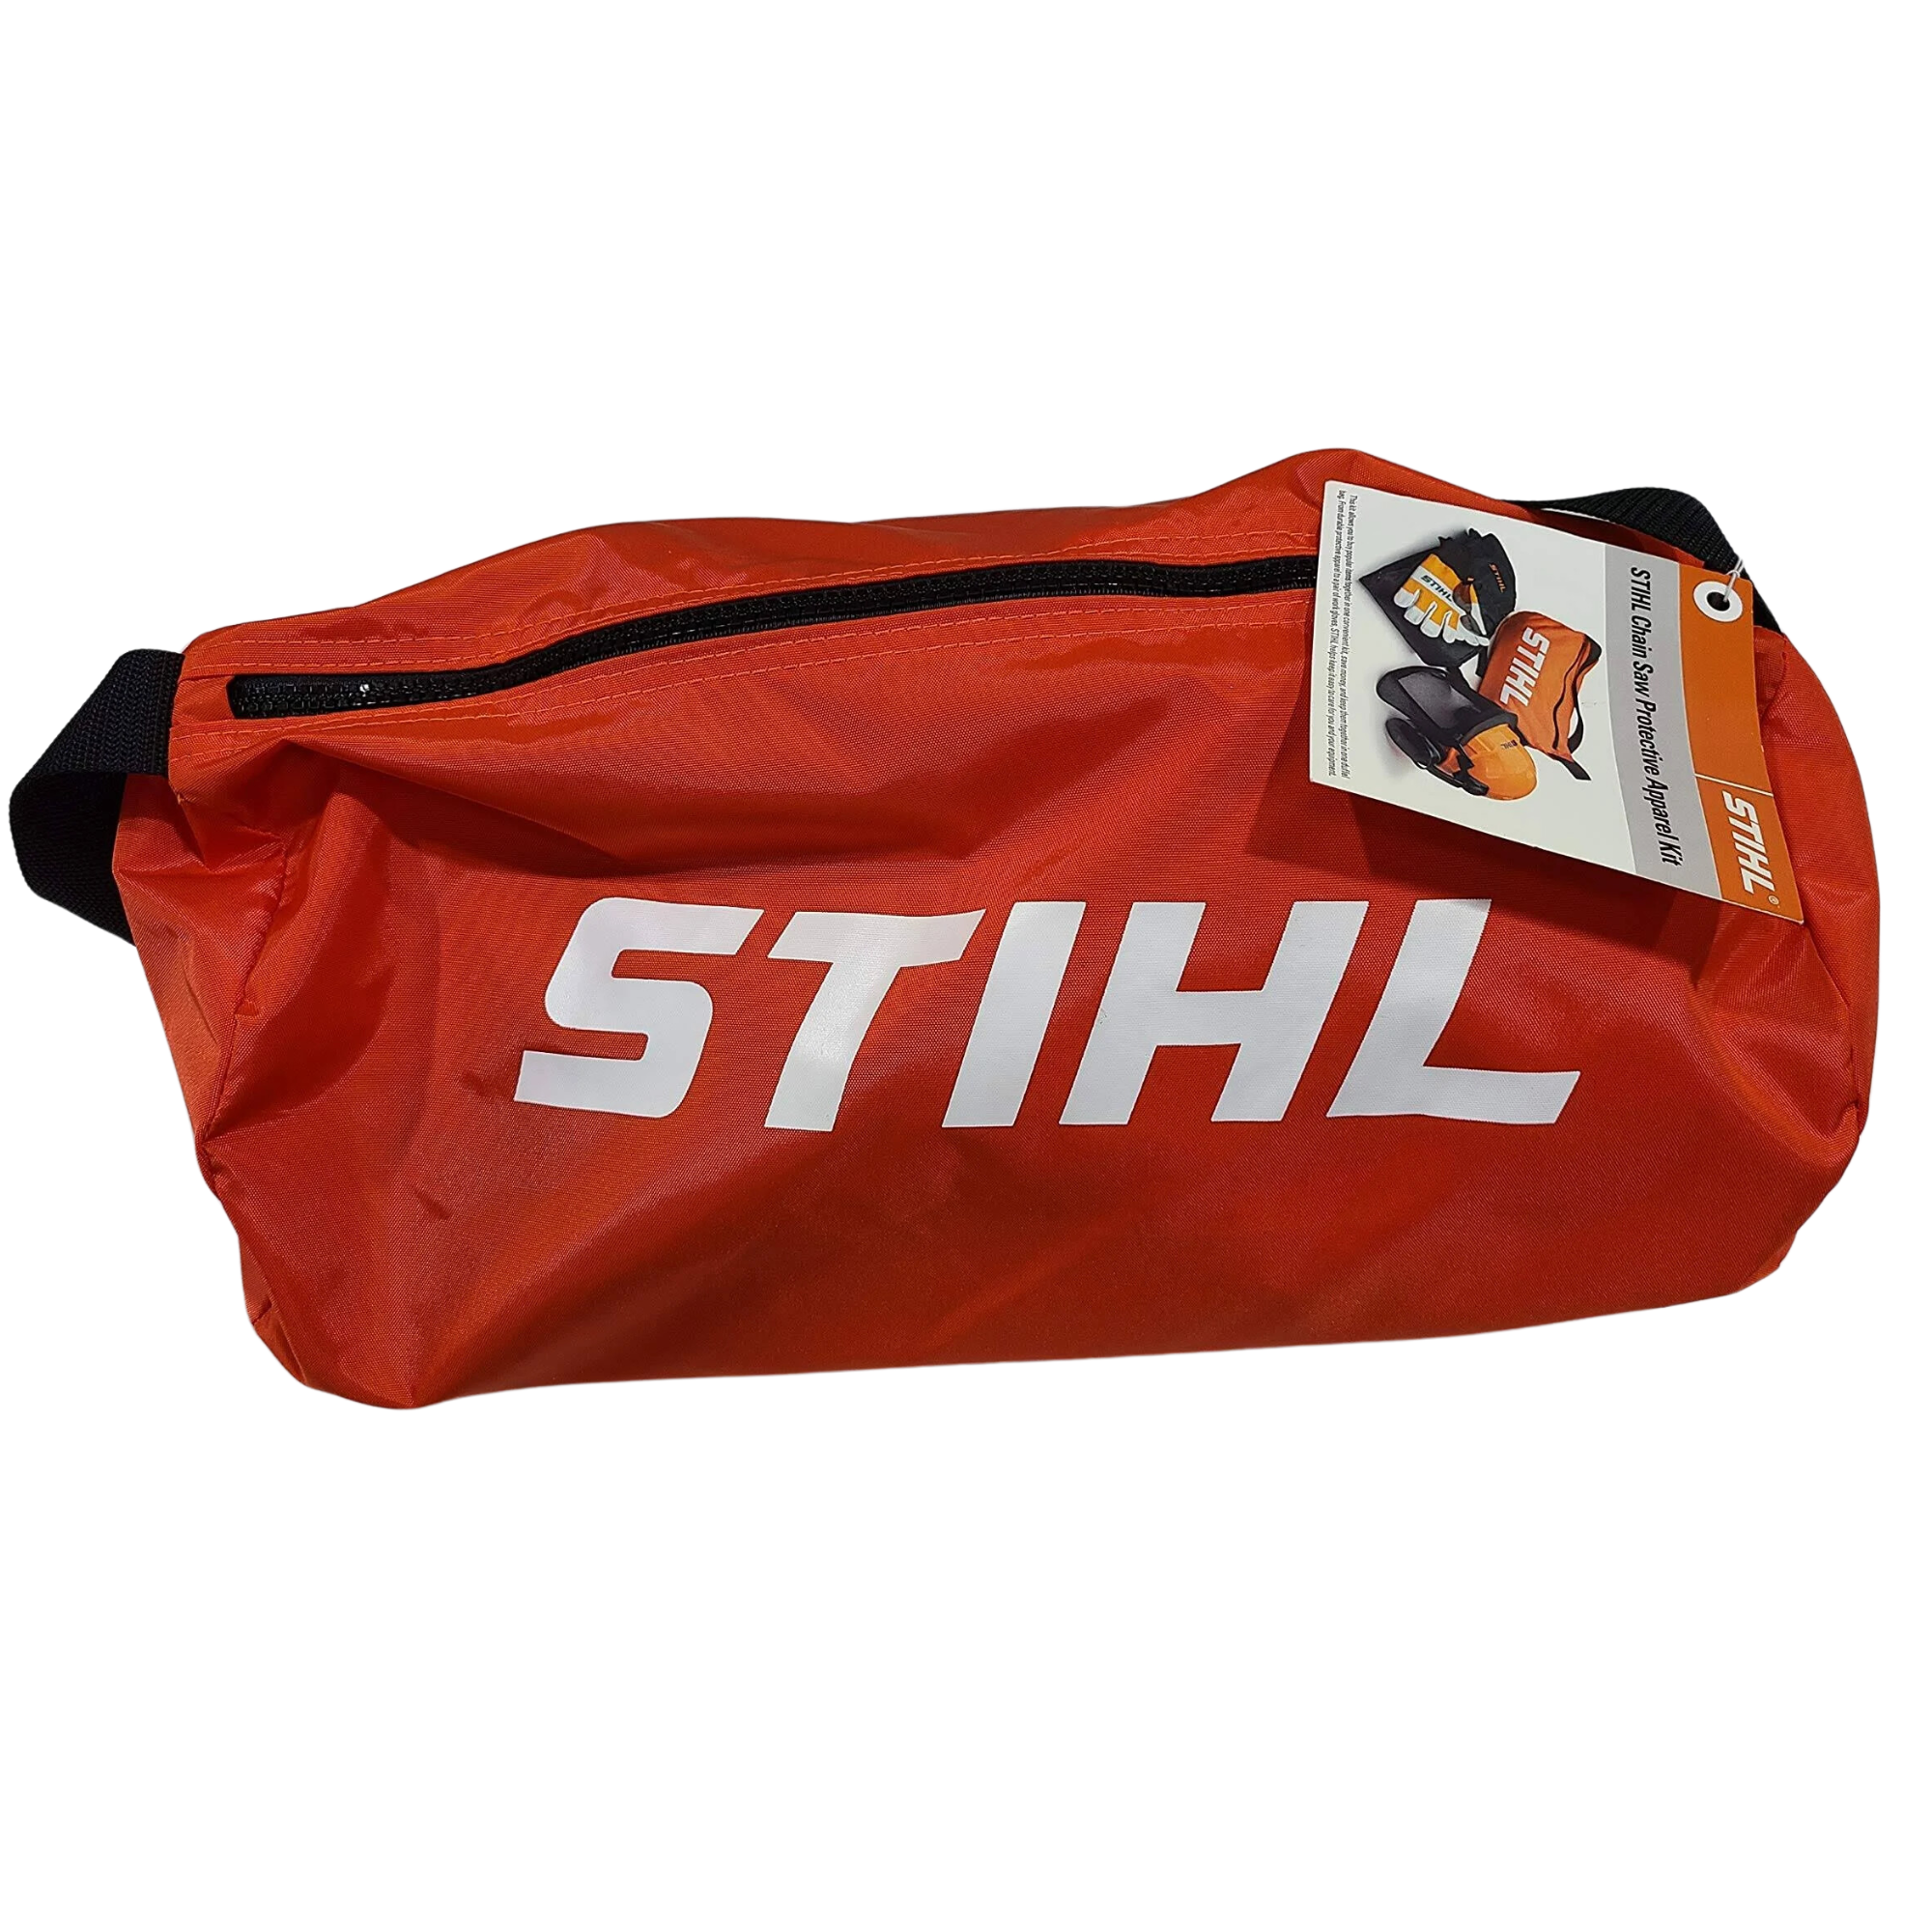 Stihl Personal Protective Equipment Kit | 7010 871 0280